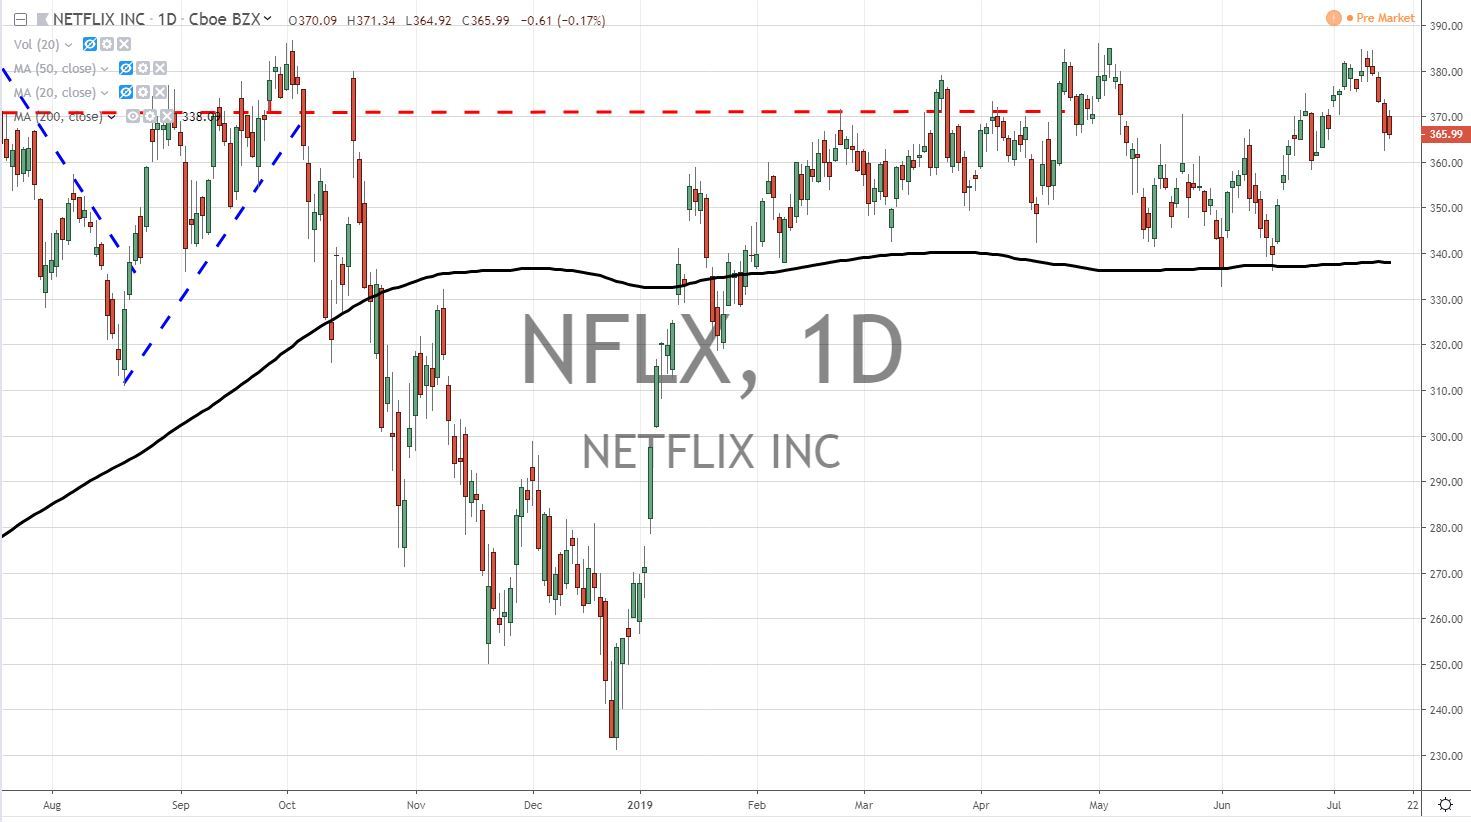 Netflix Inc NFLX Stock Chart 7.17.19 Before Earnings